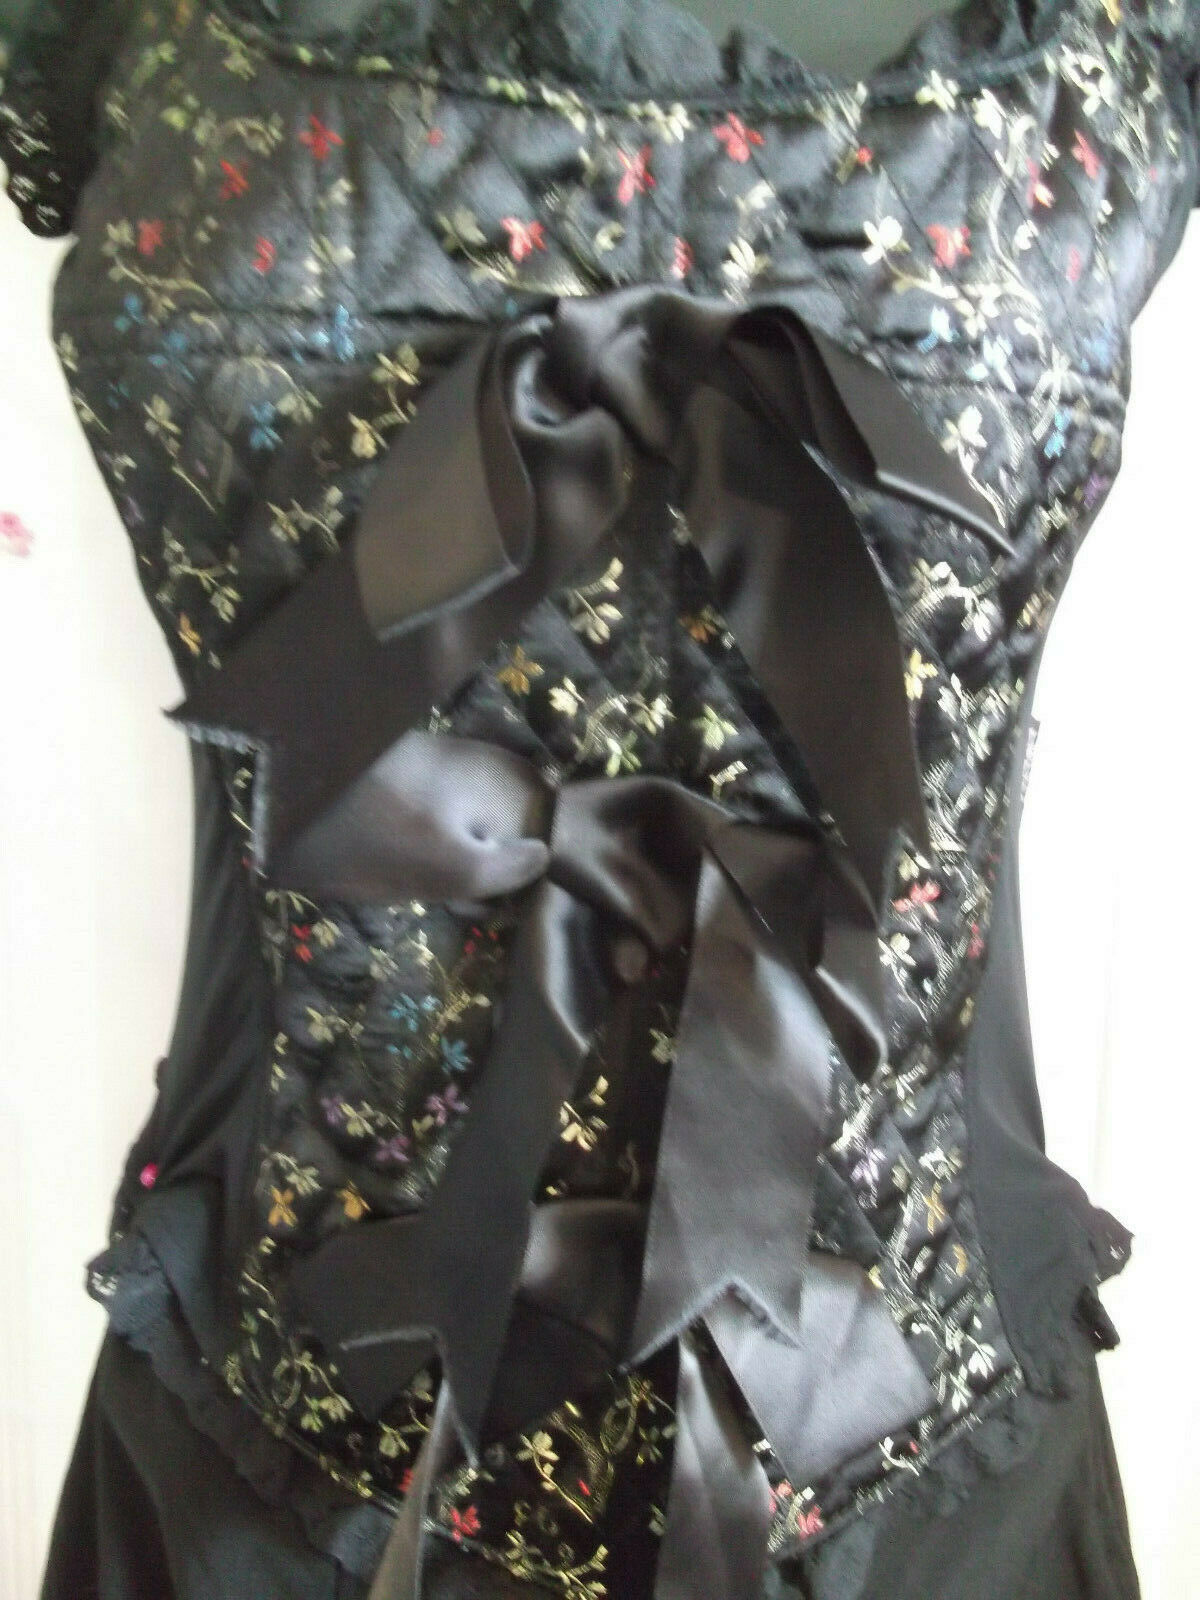 Lolita Rose Corset-black satiing/emboridered panels,satin bows,ribbons.size10/12 Wonkey Donkey Bazaar